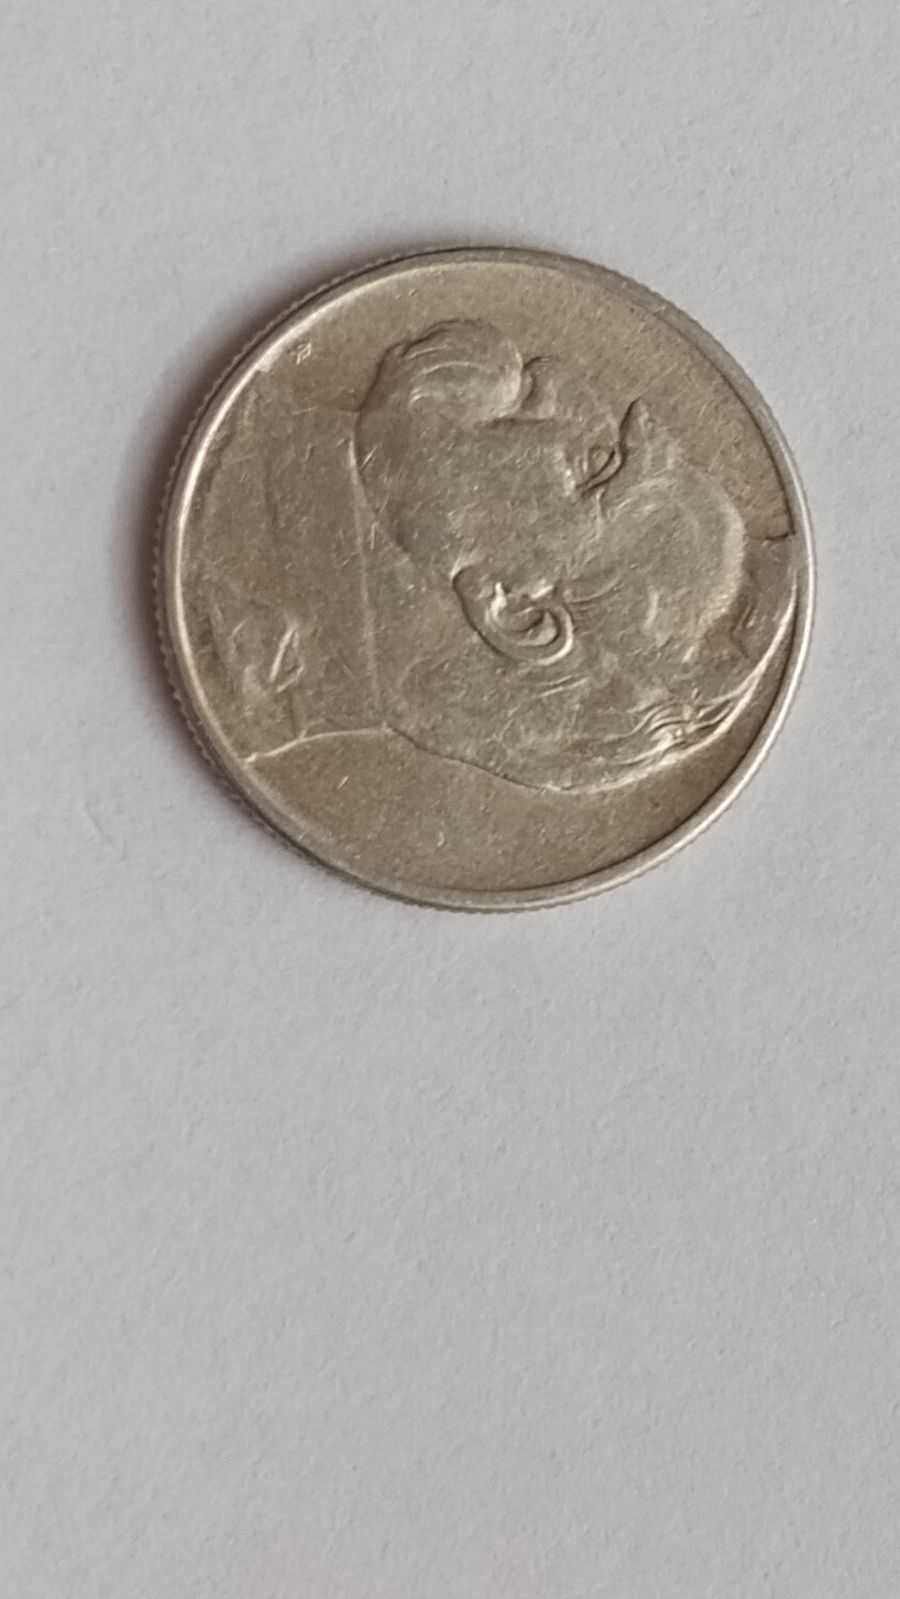 Moneta 2zł Józef Piłsudski 1934 srebro